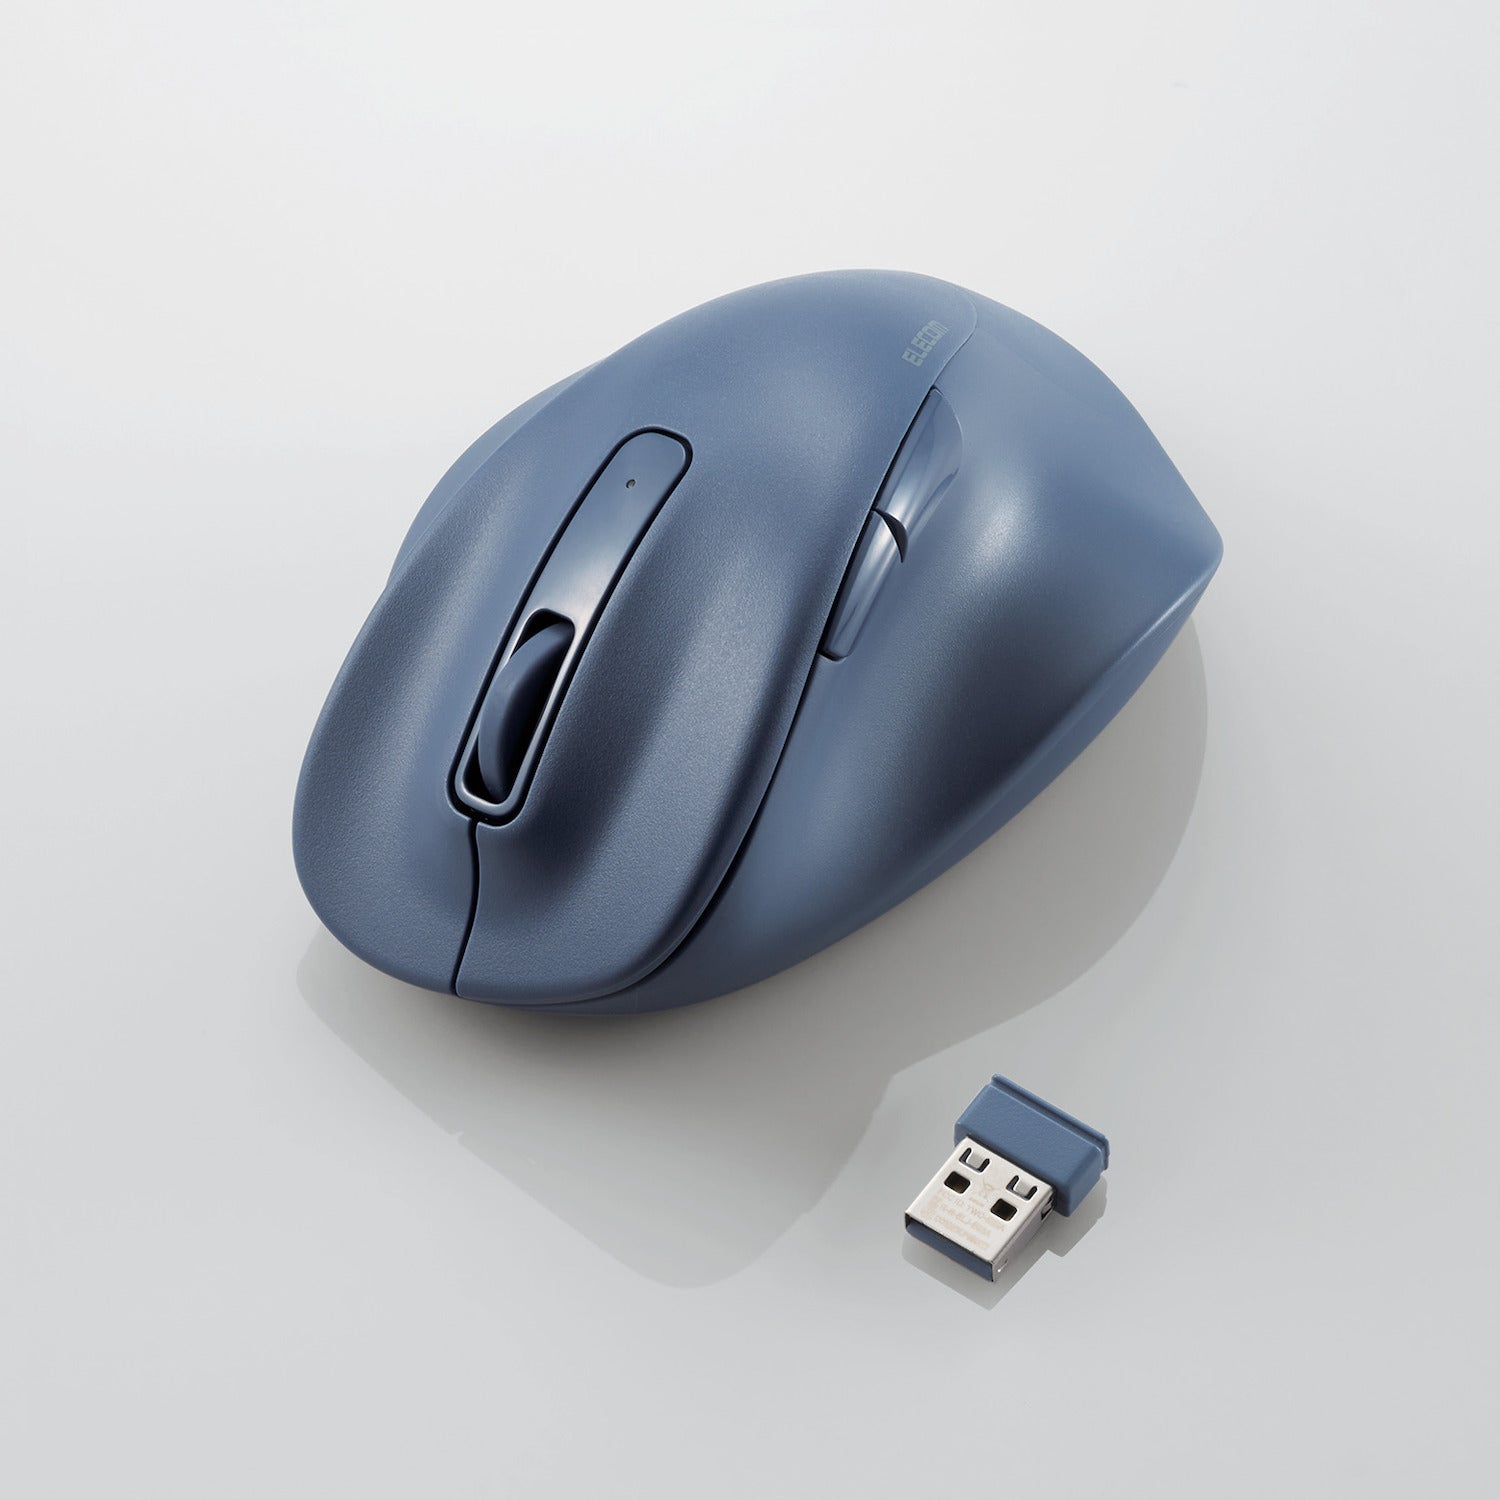 EX-G Wireless USB Ergonomic Mouse